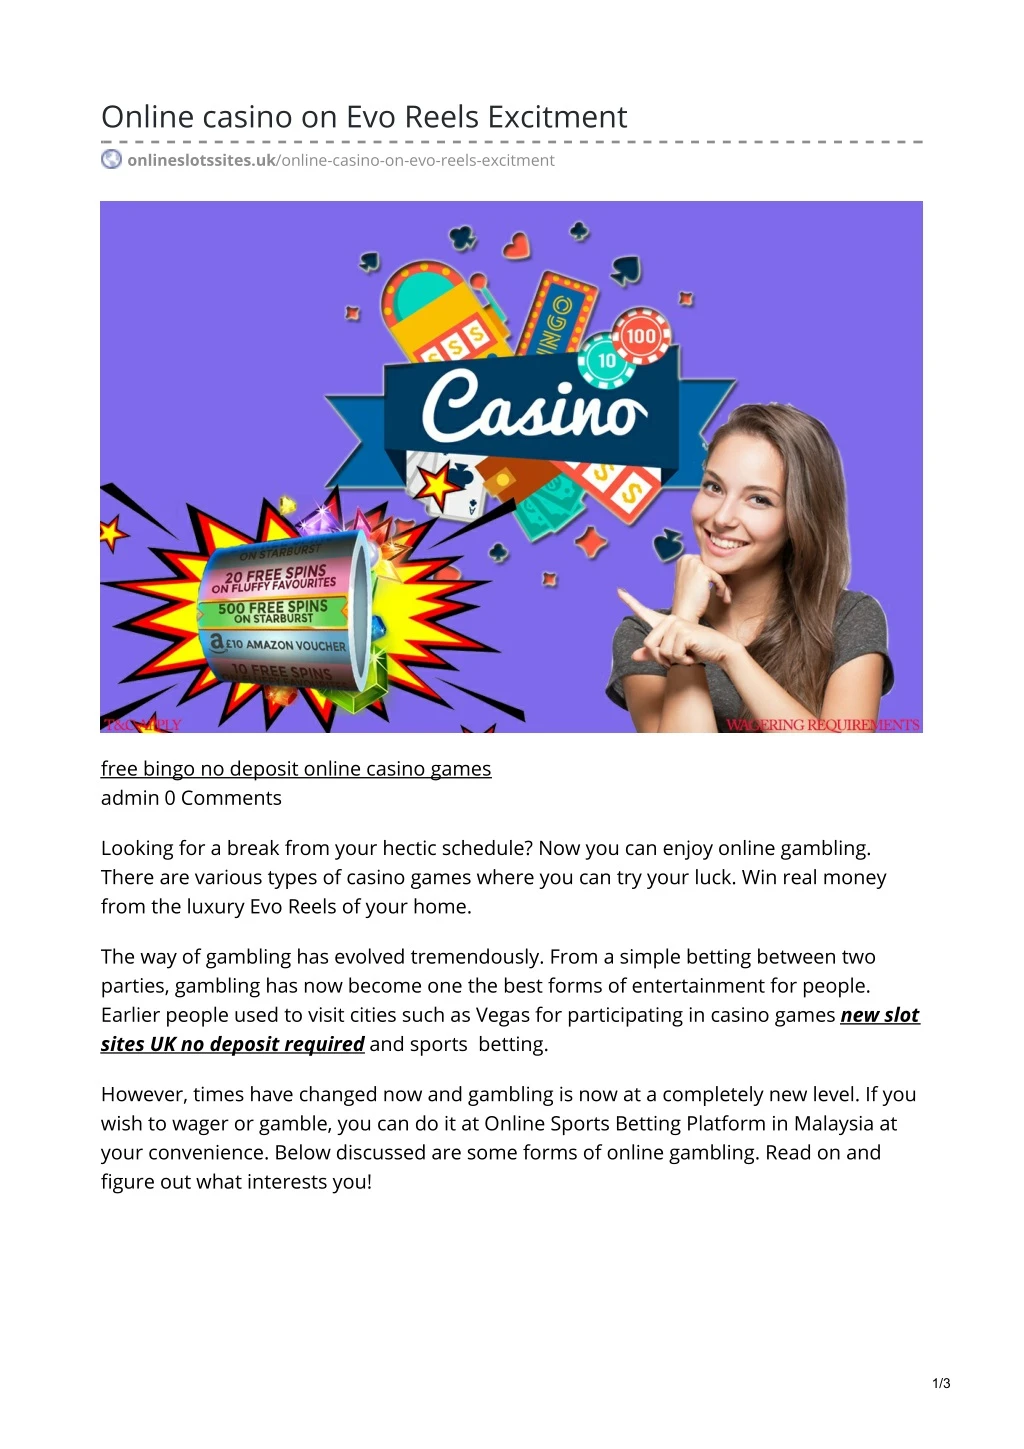 online casino on evo reels excitment